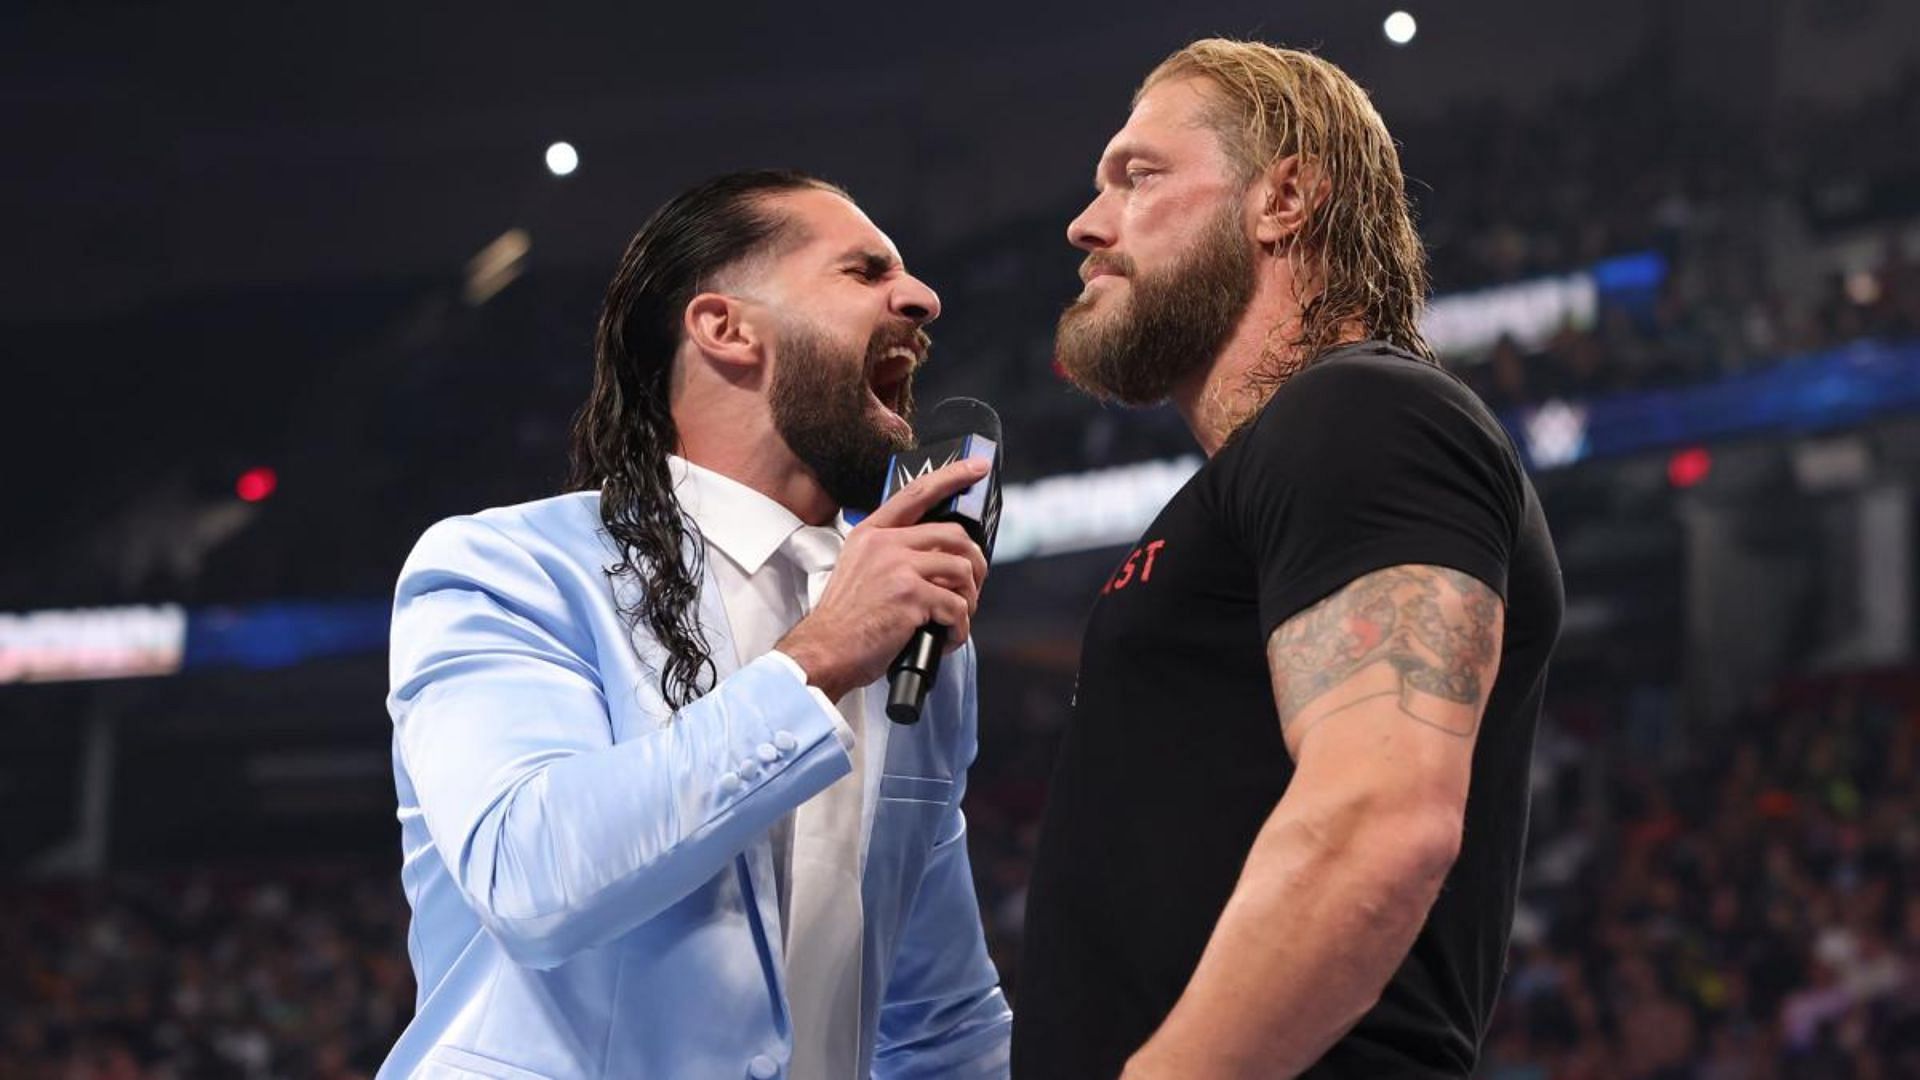 Will Edge vs. Seth Rollins headline Night of Champions?